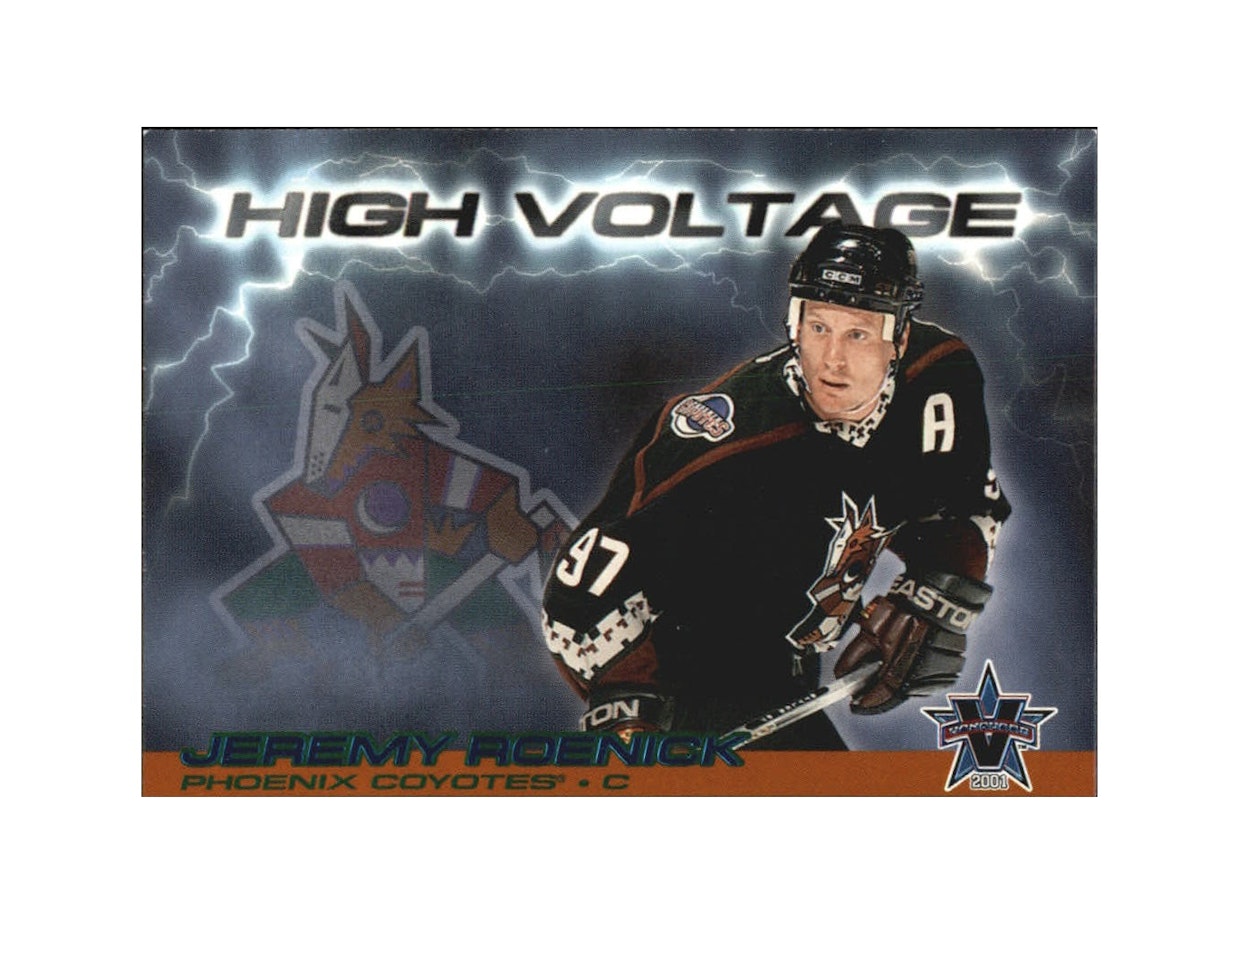 2000-01 Vanguard High Voltage #27 Jeremy Roenick (12-X170-COYOTES)